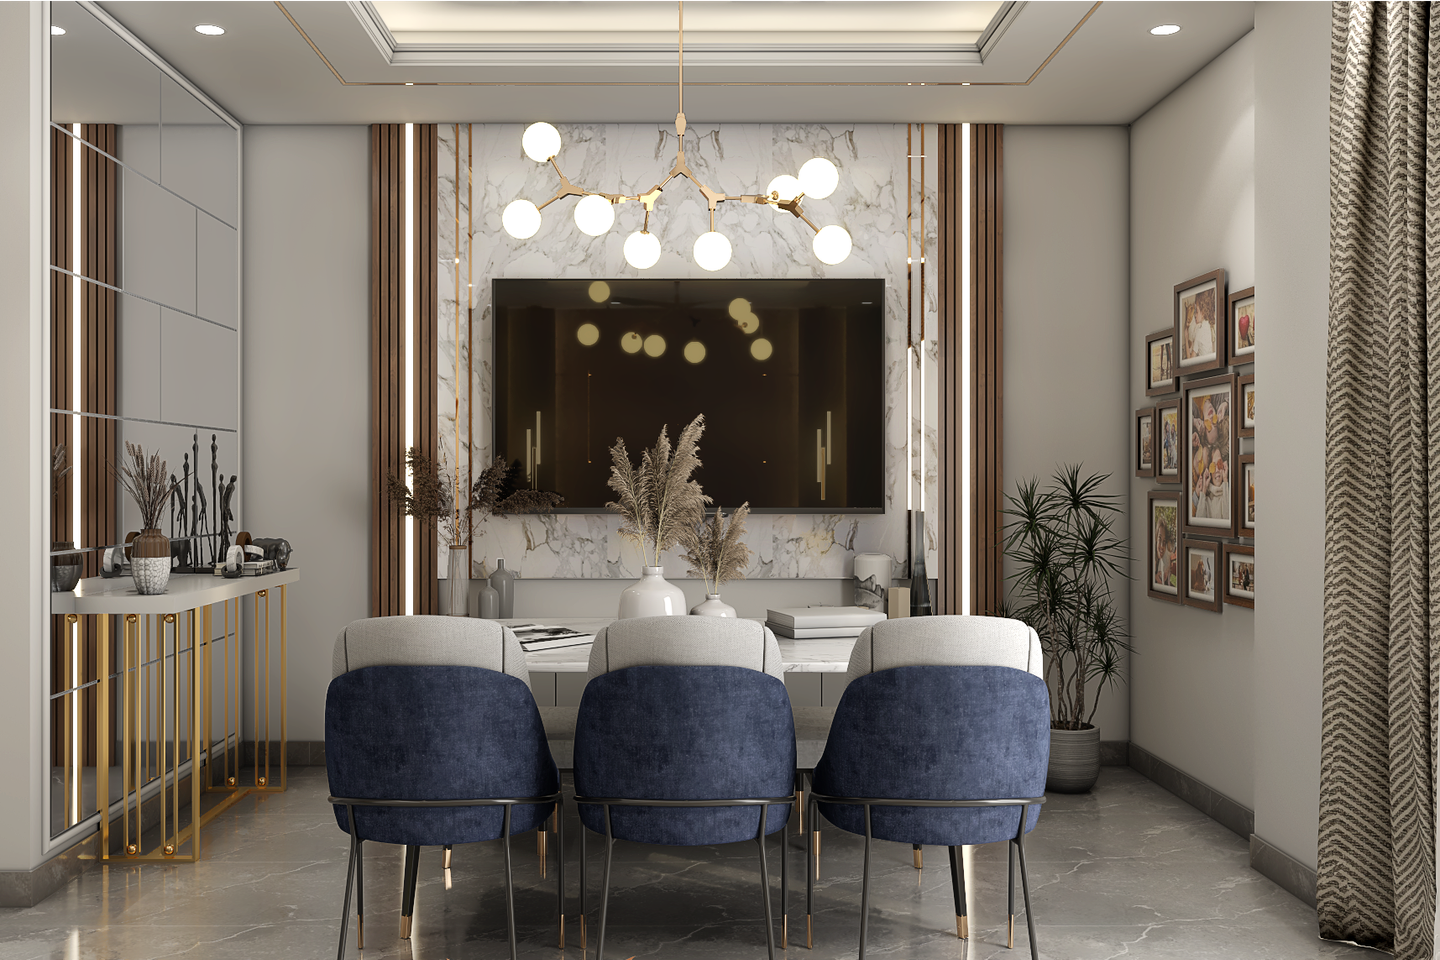 Beautiful Dining Room Design With Contemporary Aesthetics - Livspace